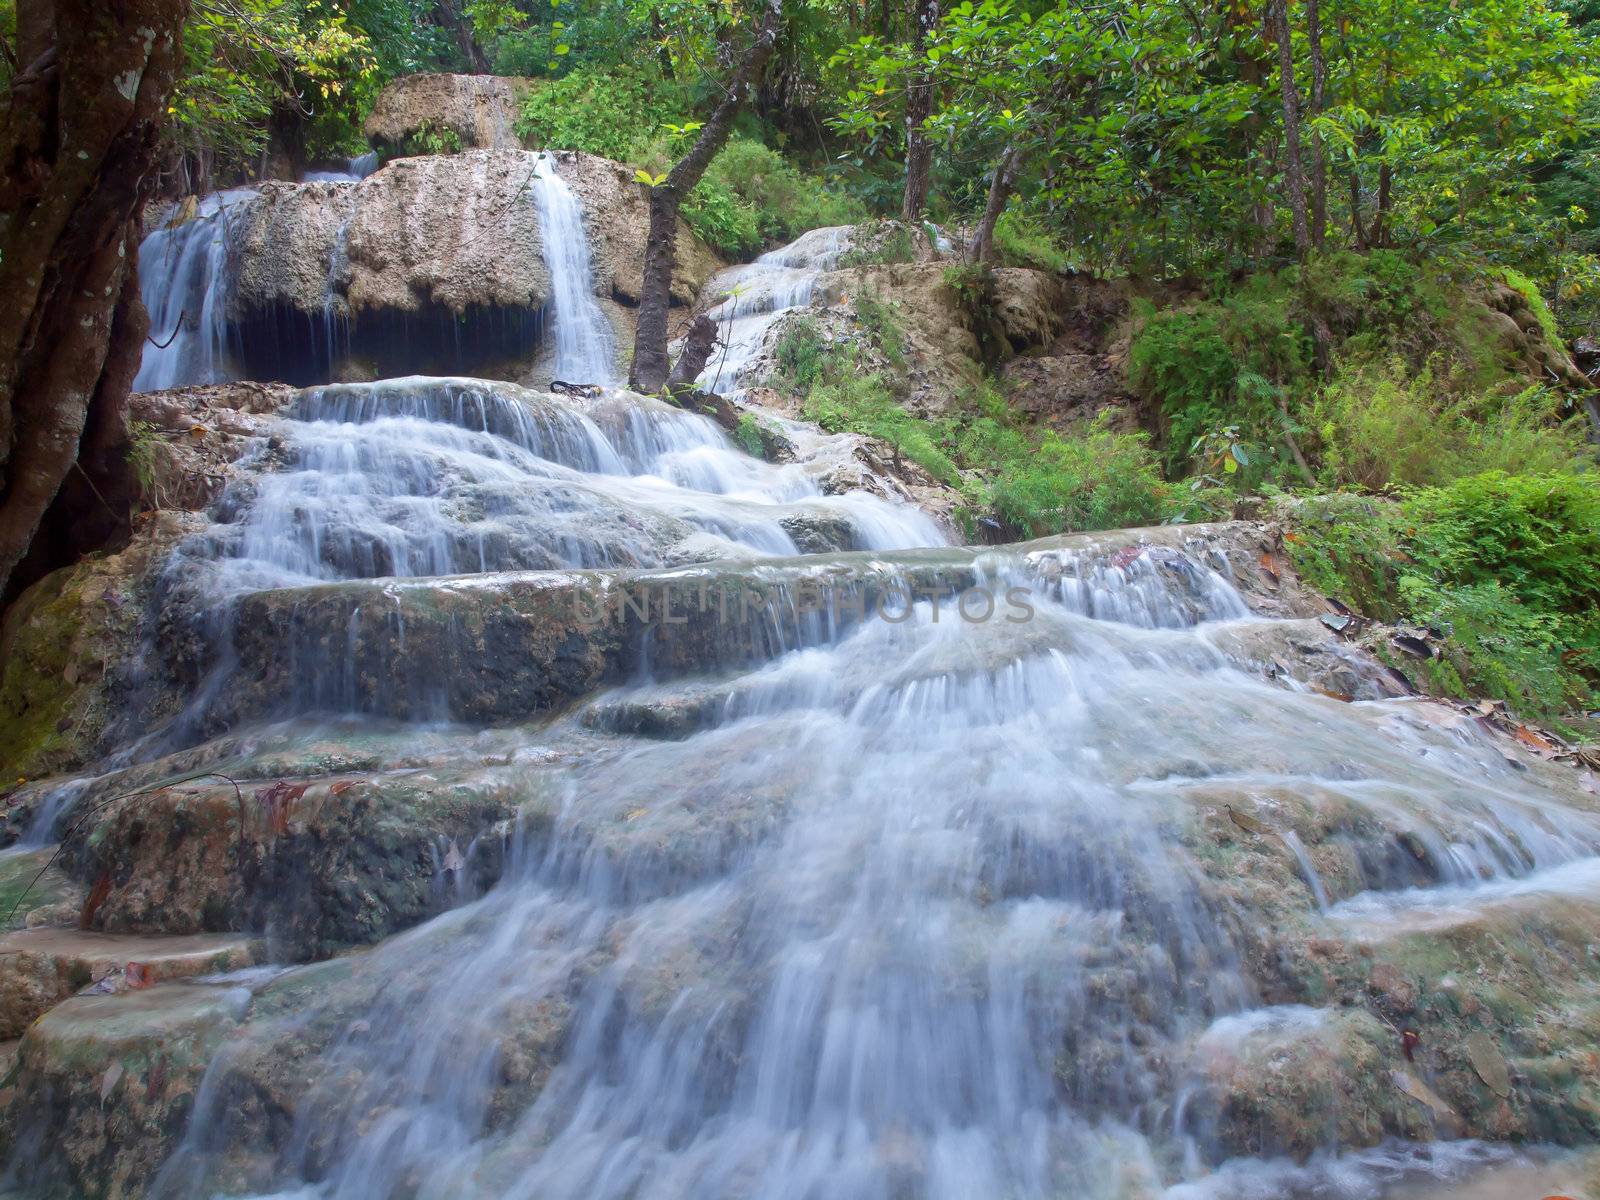 Emerald color water in Erawan waterfall, Erawan National Park, Kanchanaburi, Thailand